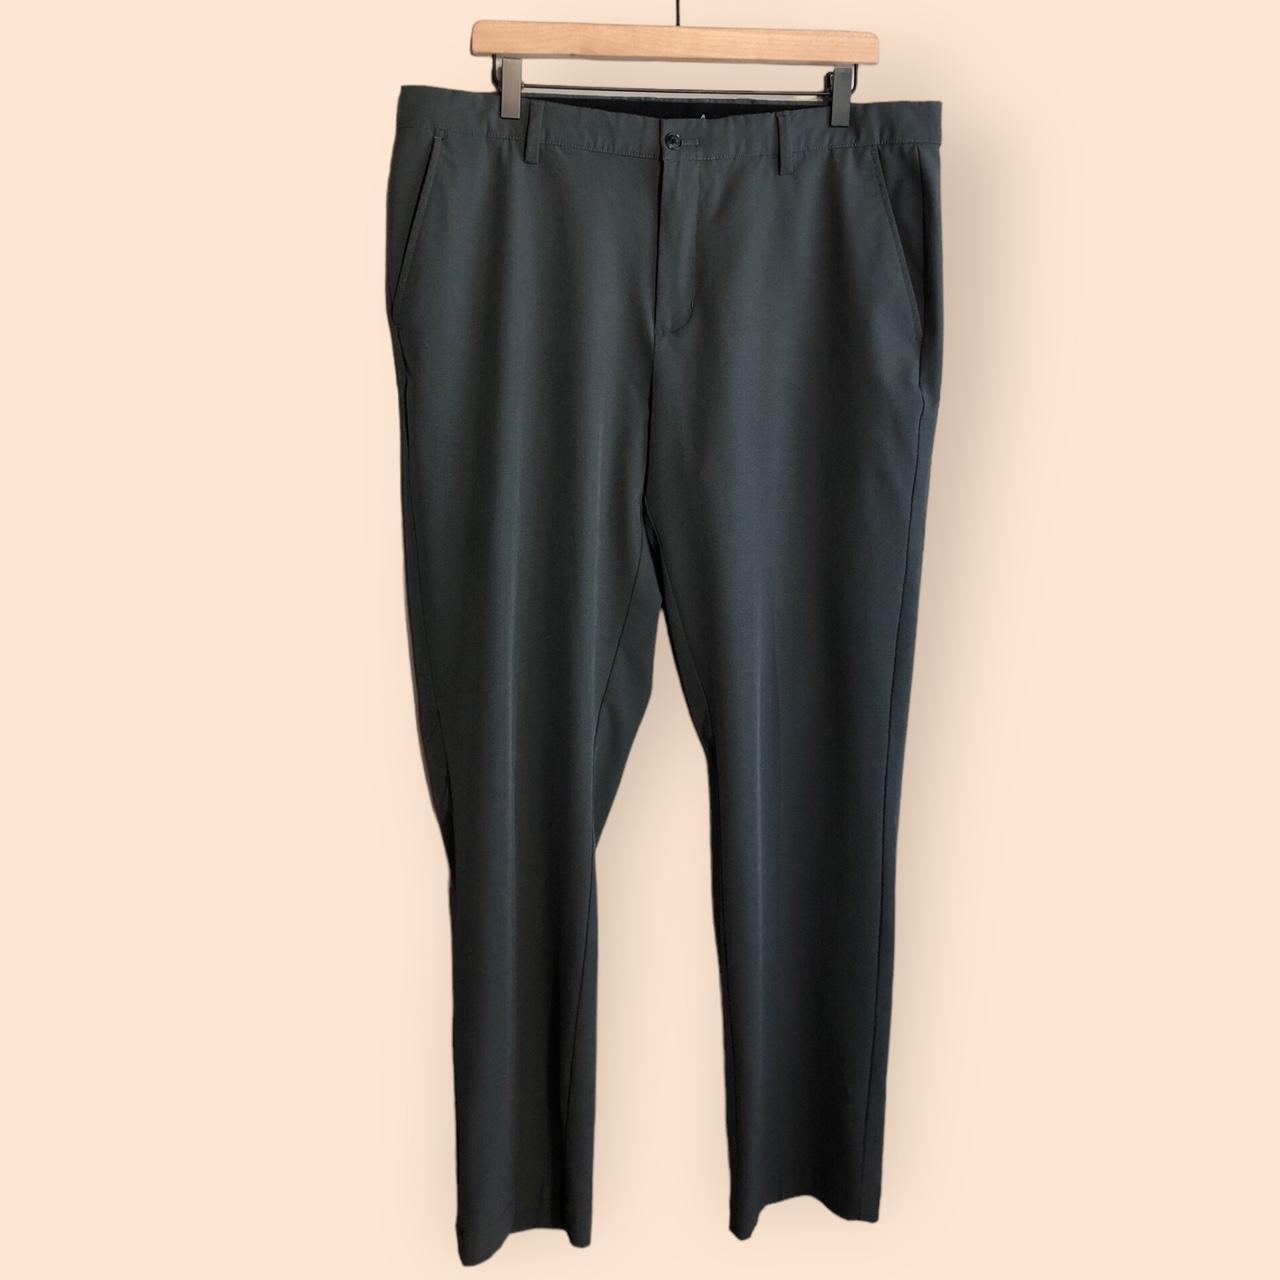 Greg Norman Golf Pants 32x32 Gray | eBay